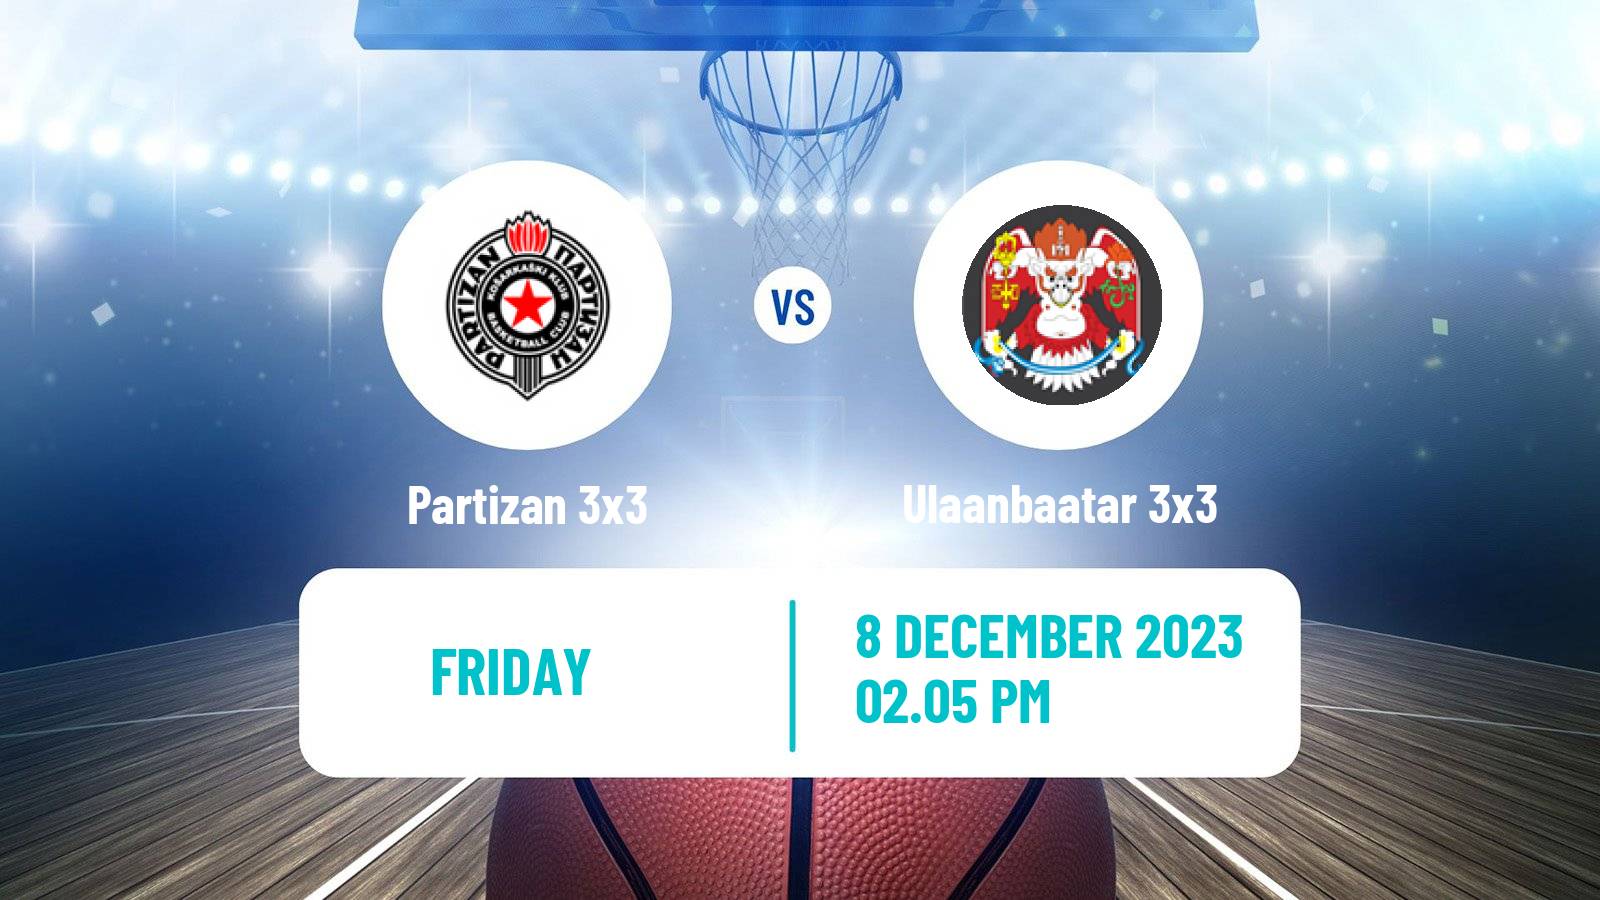 Basketball World Tour Final 3x3 Partizan 3x3 - Ulaanbaatar 3x3